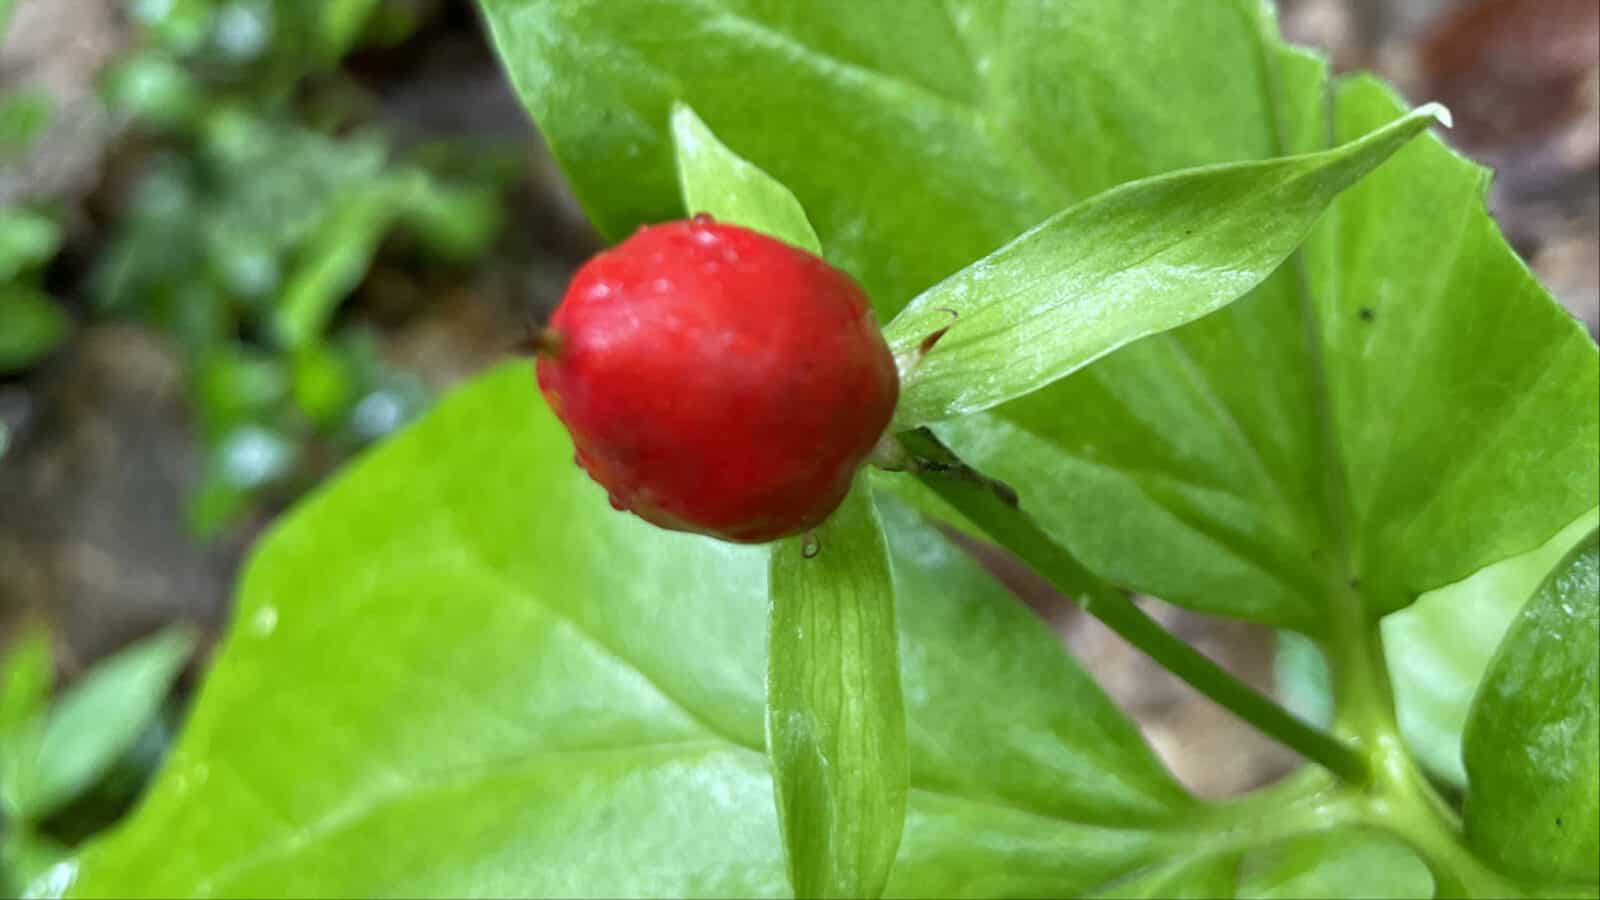 A trillium's berry gleams bright red in the rain along the Appalachian Trail.